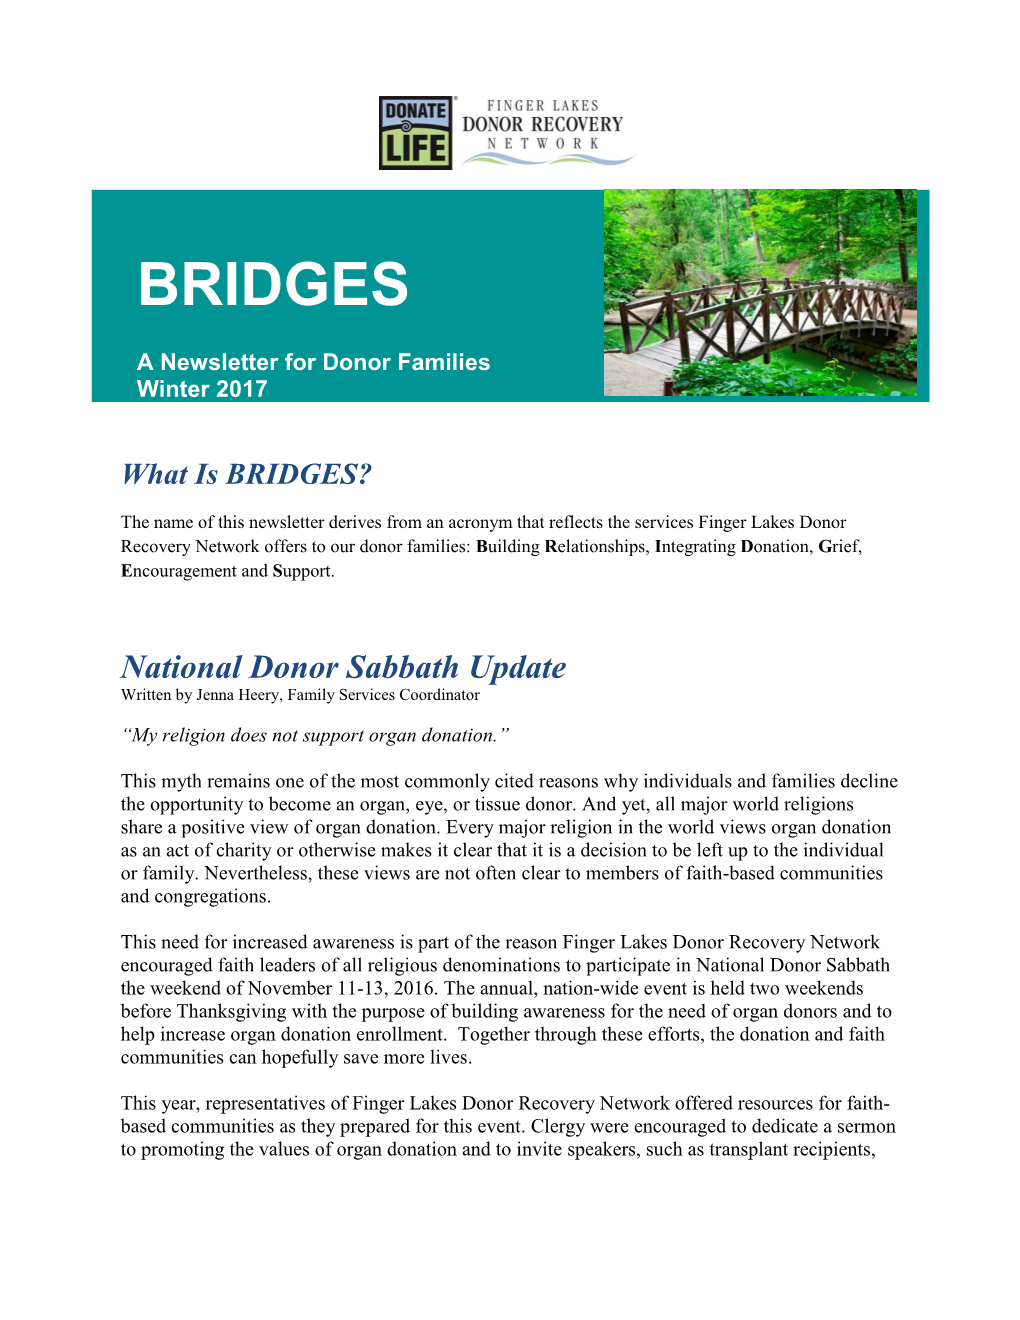 BRIDGES Newsletter Winter 2017